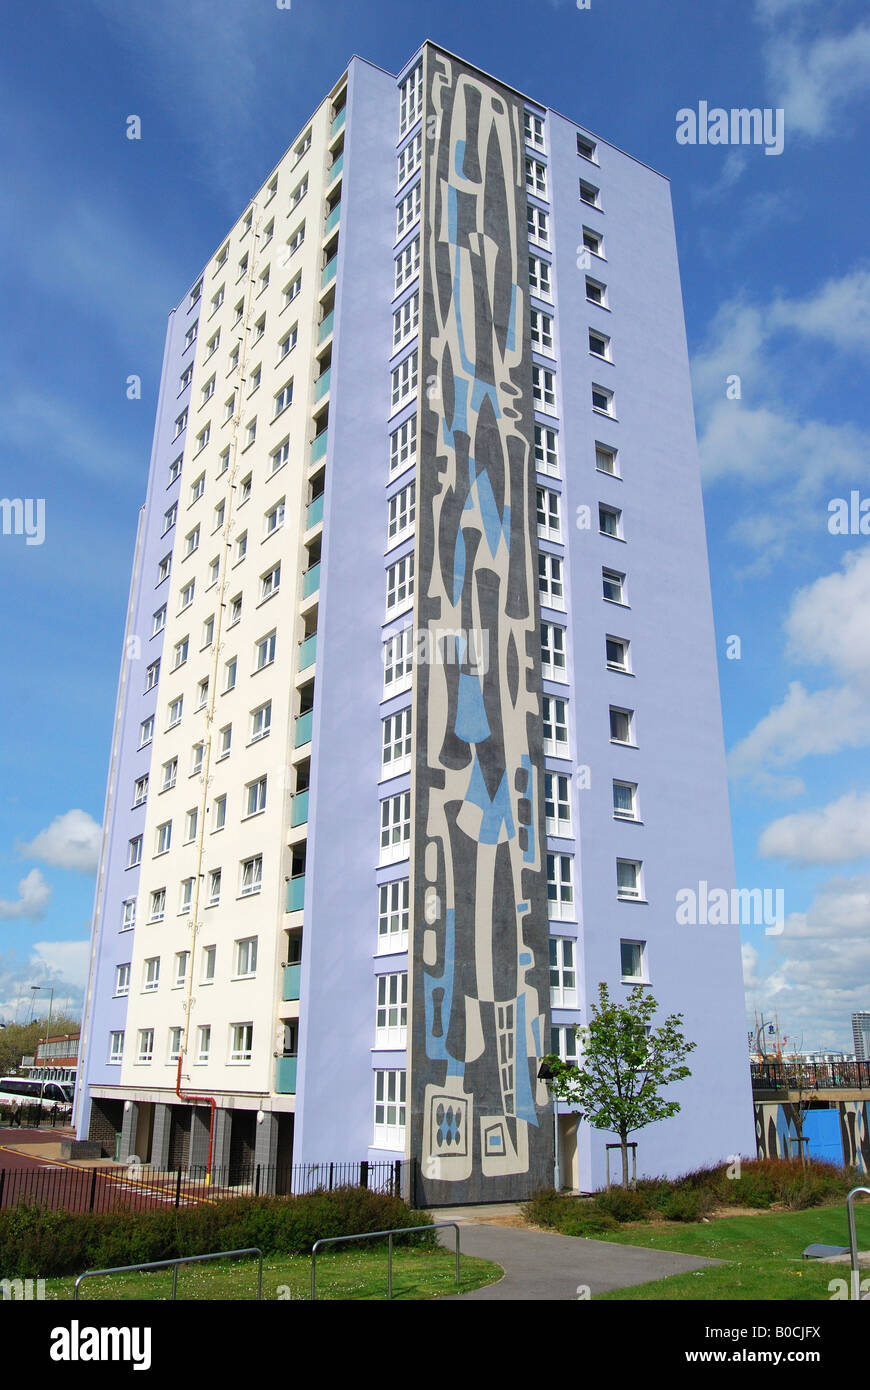 Residential high-rise flats, Waterfront, Gosport, Hampshire, England, United Kingdom Stock Photo